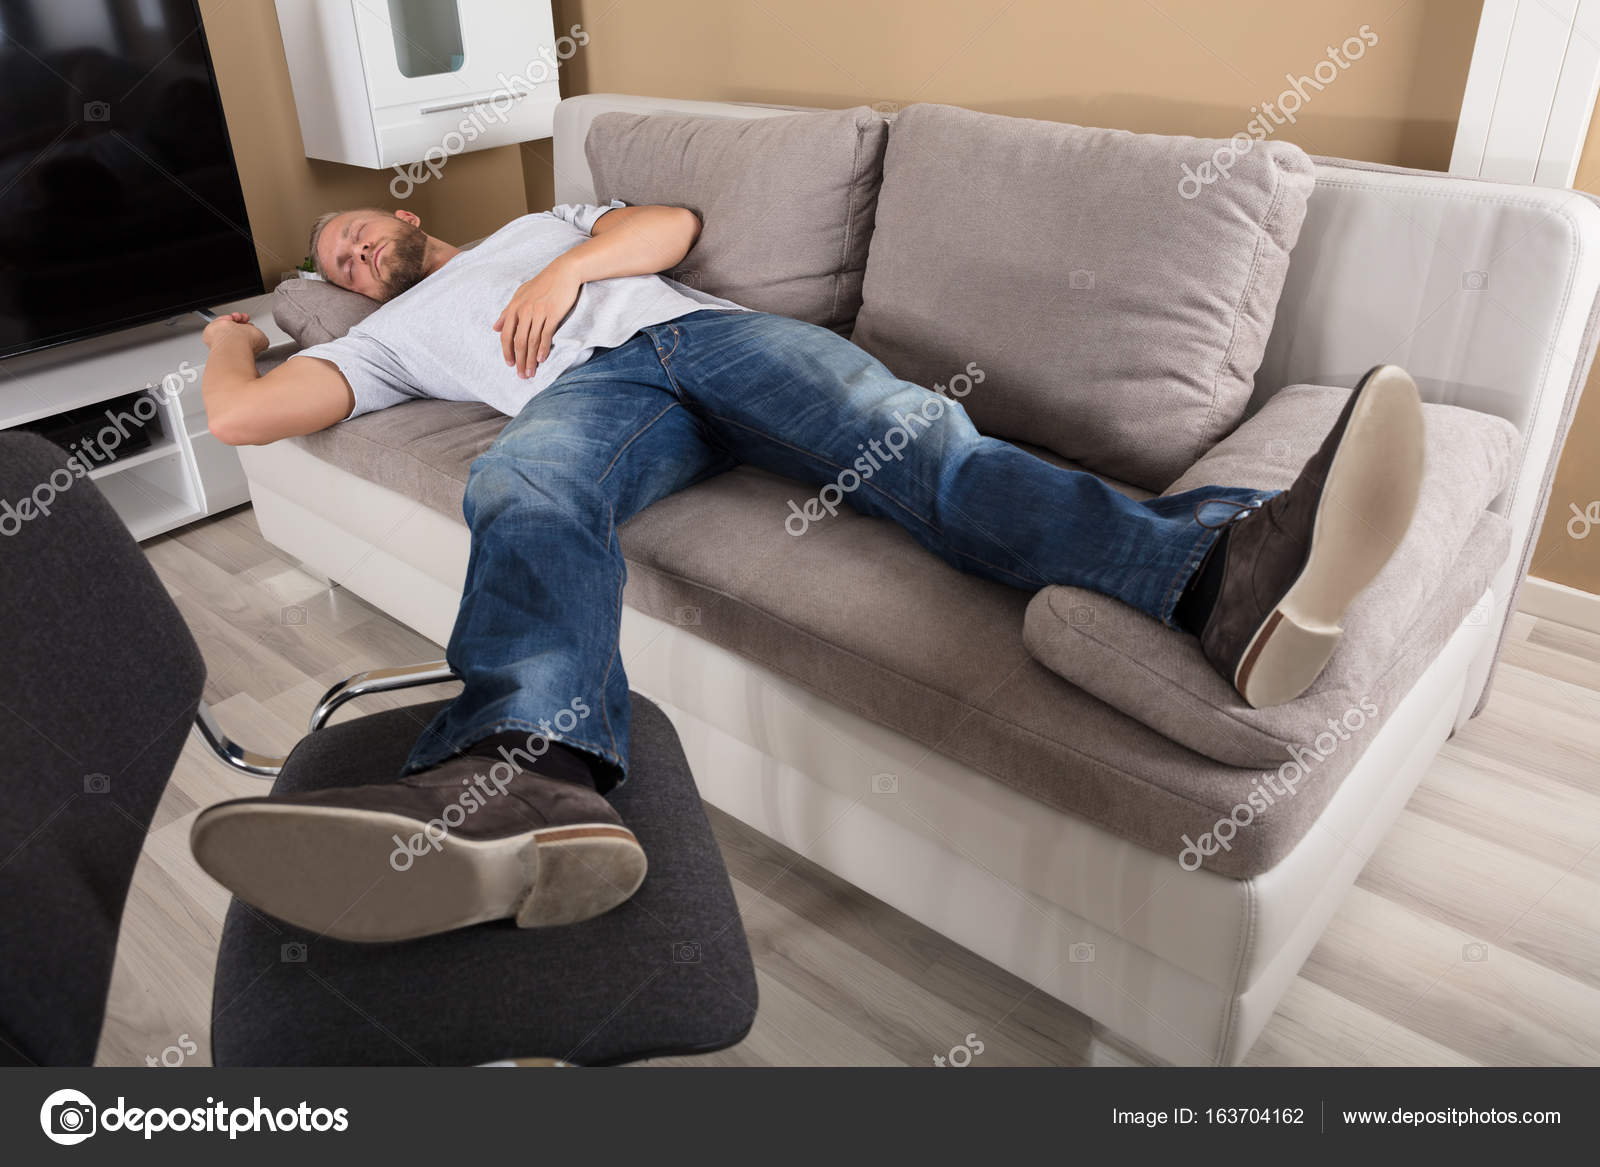 depositphotos_163704162-stock-photo-man-sleeping-on-couch.jpg